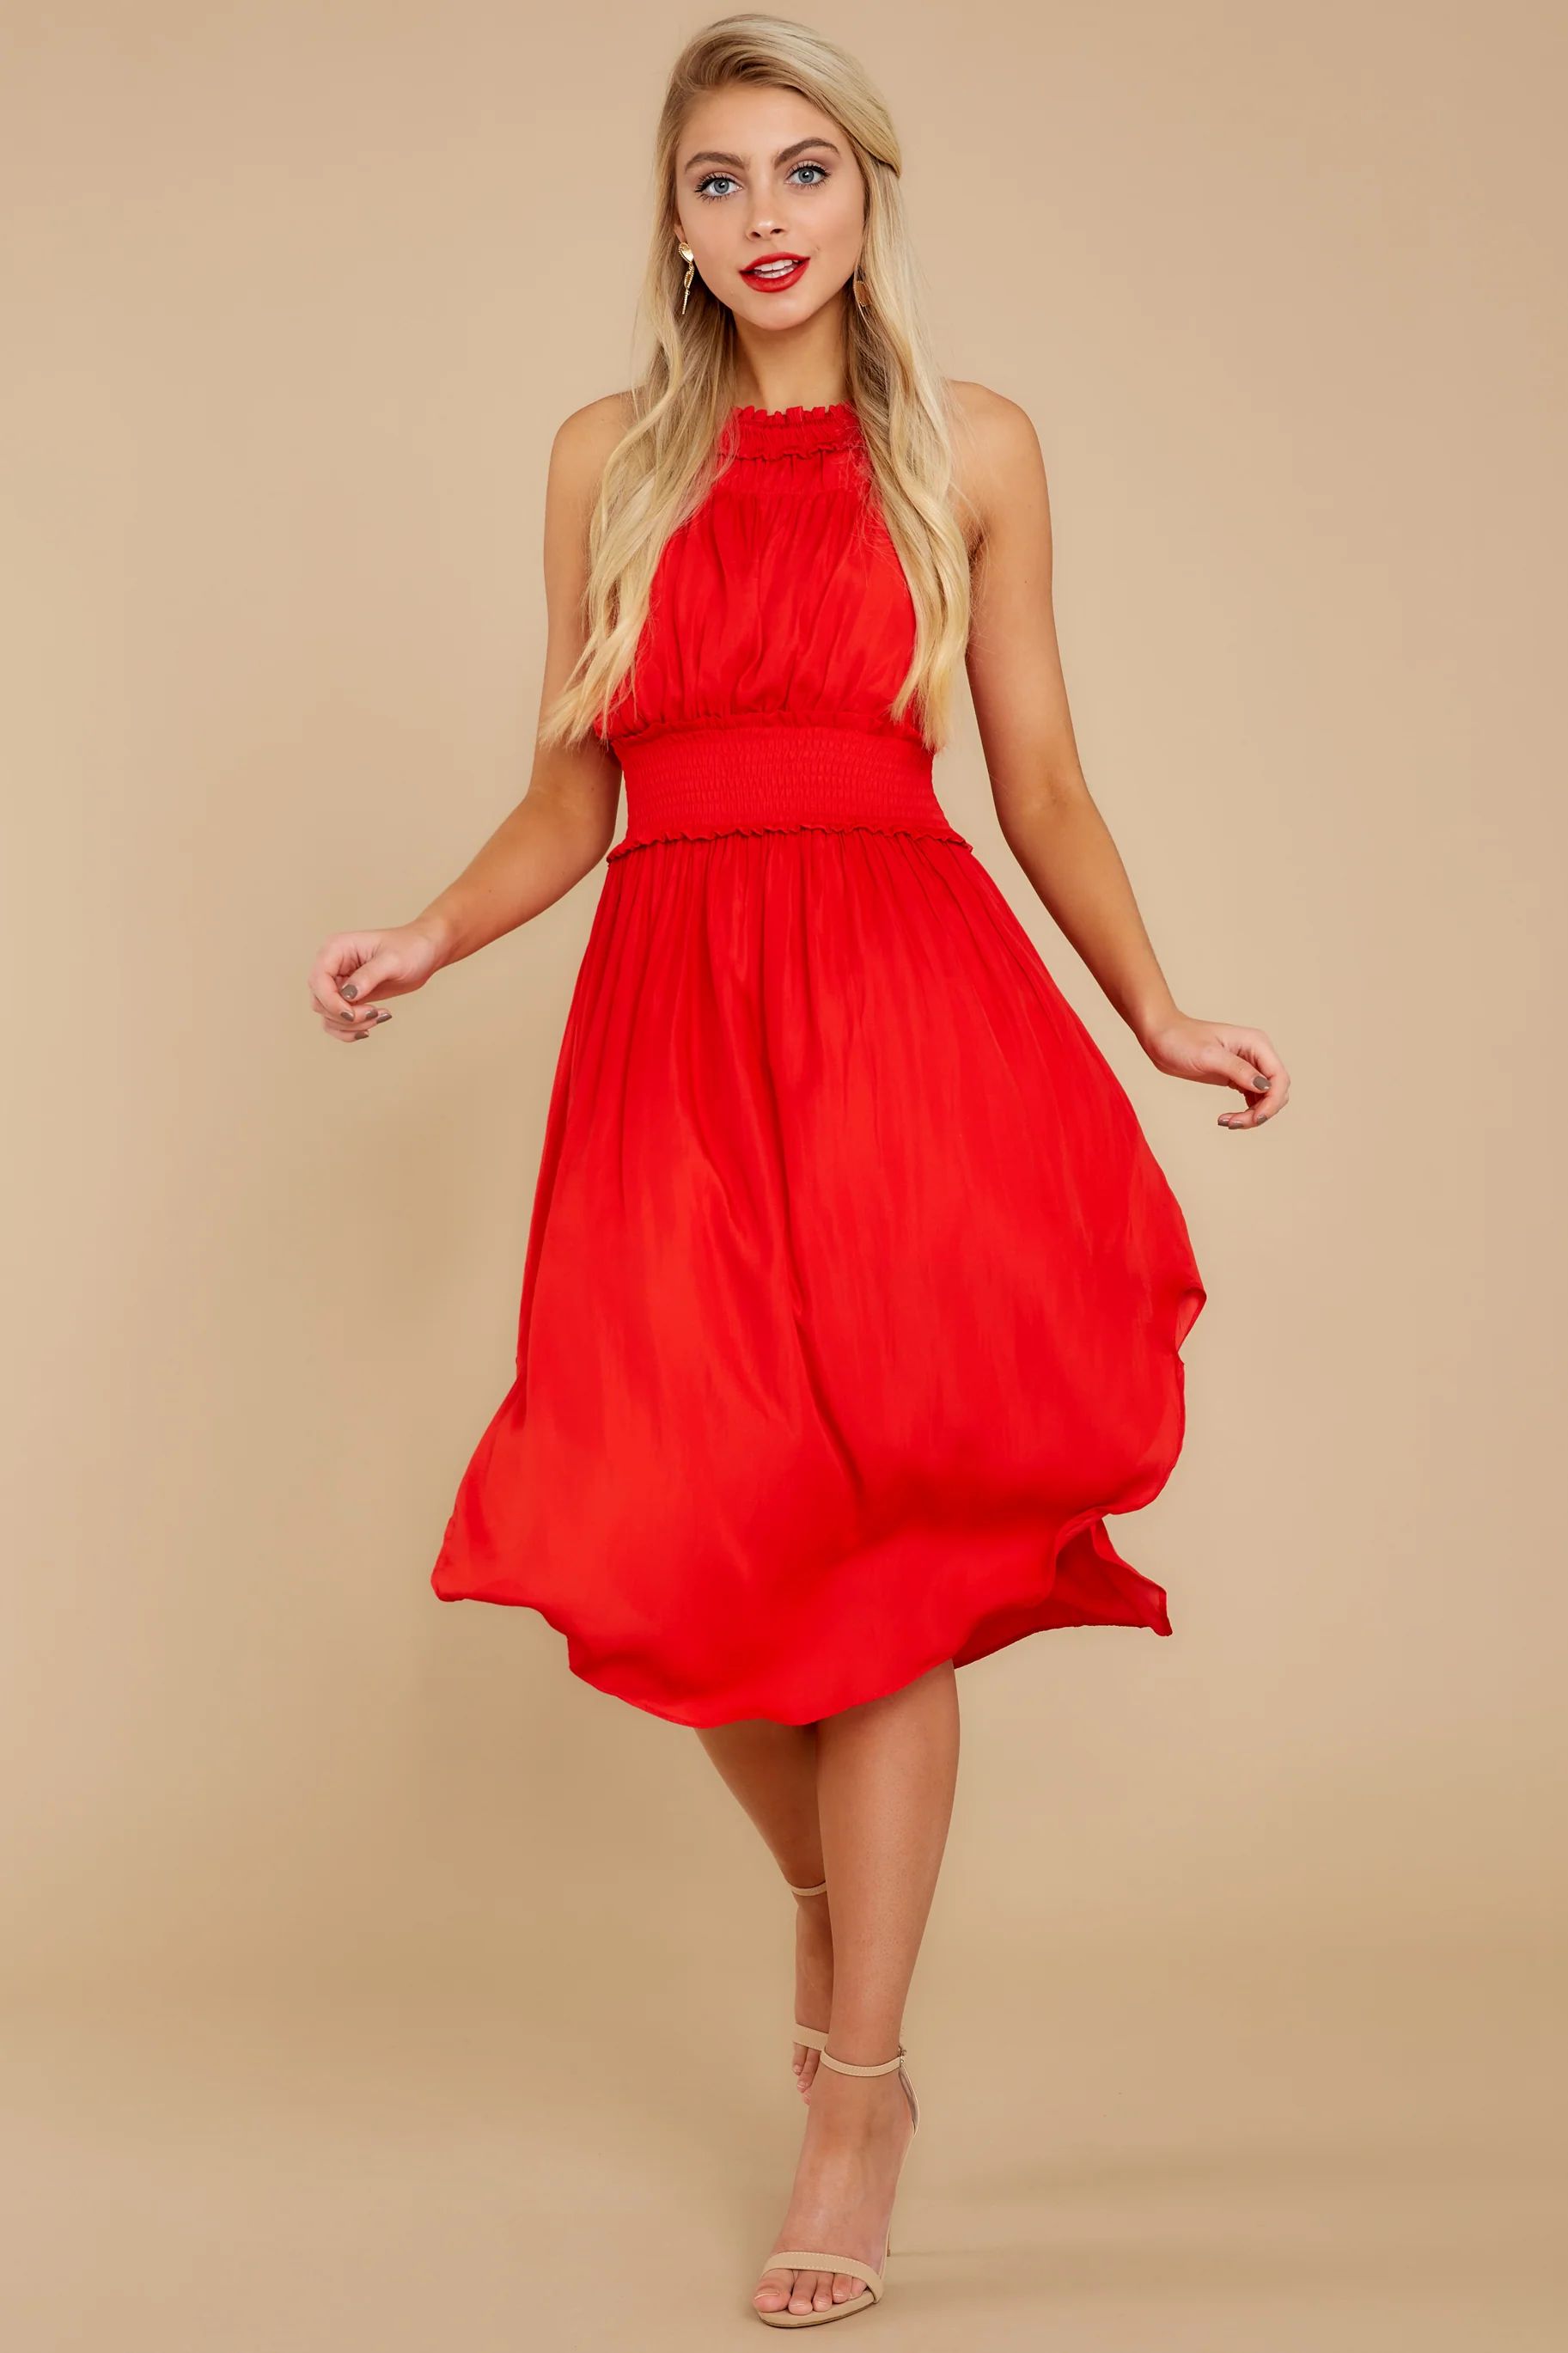 Shall We Dance Red Midi Dress | Red Dress 